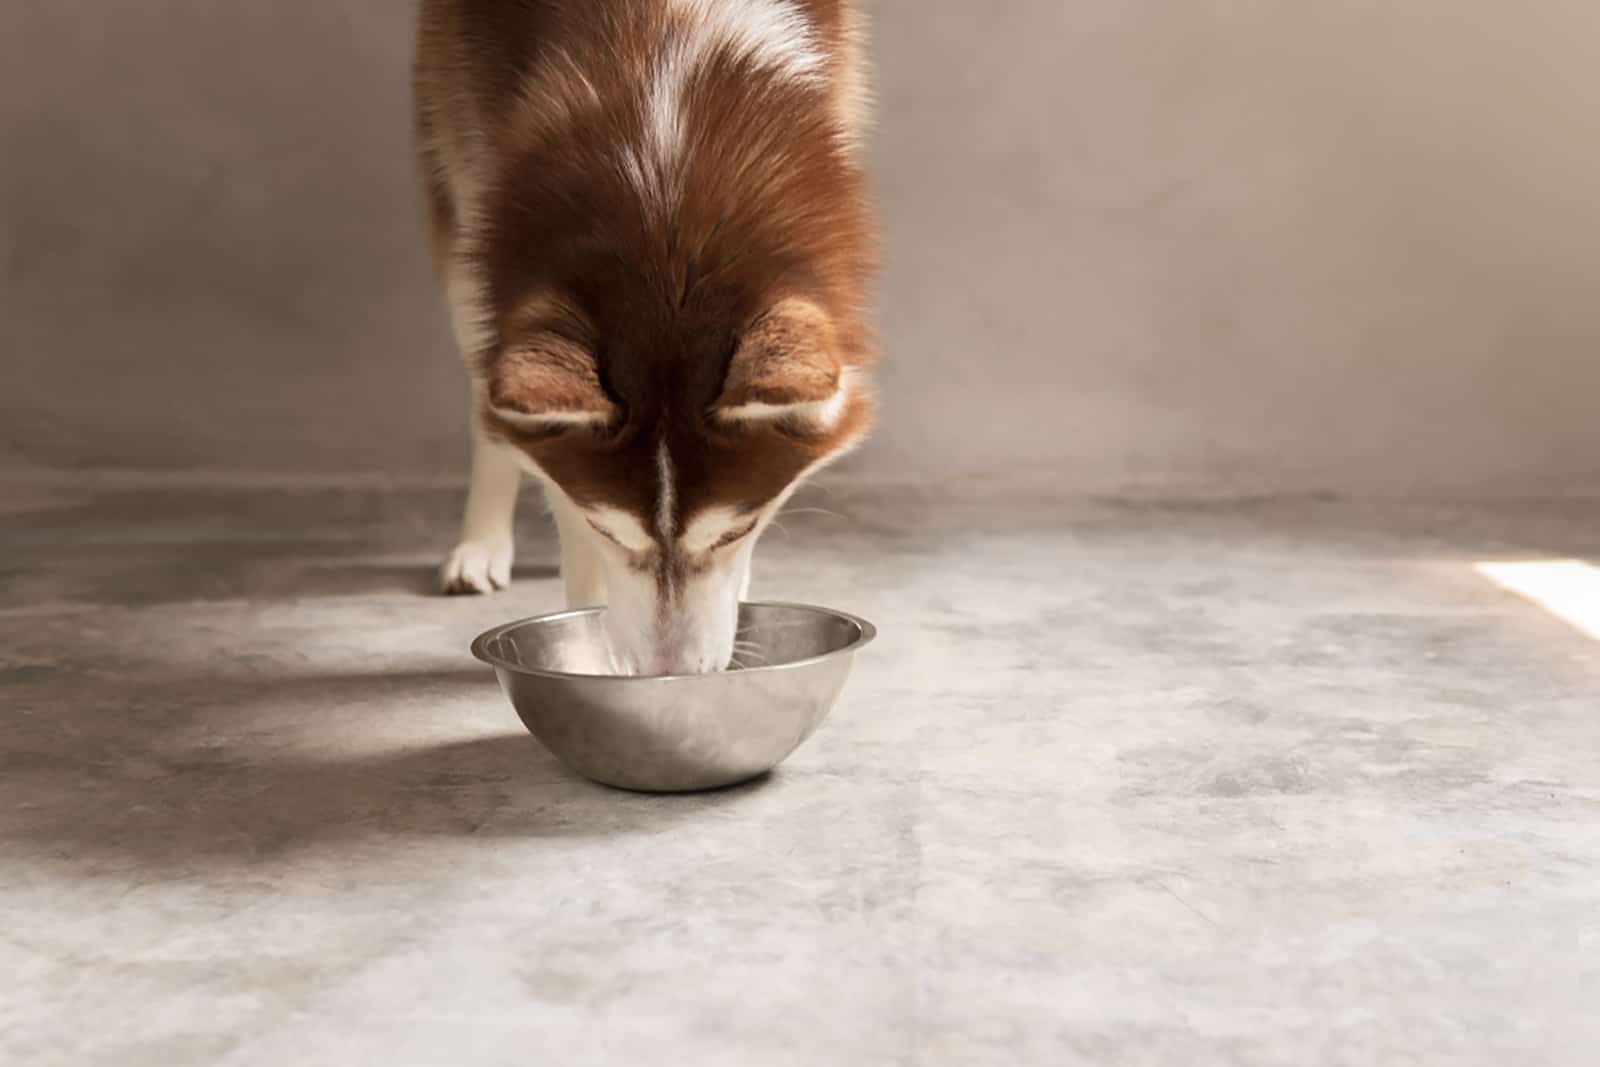 siberian husky eating food from a metal bowl